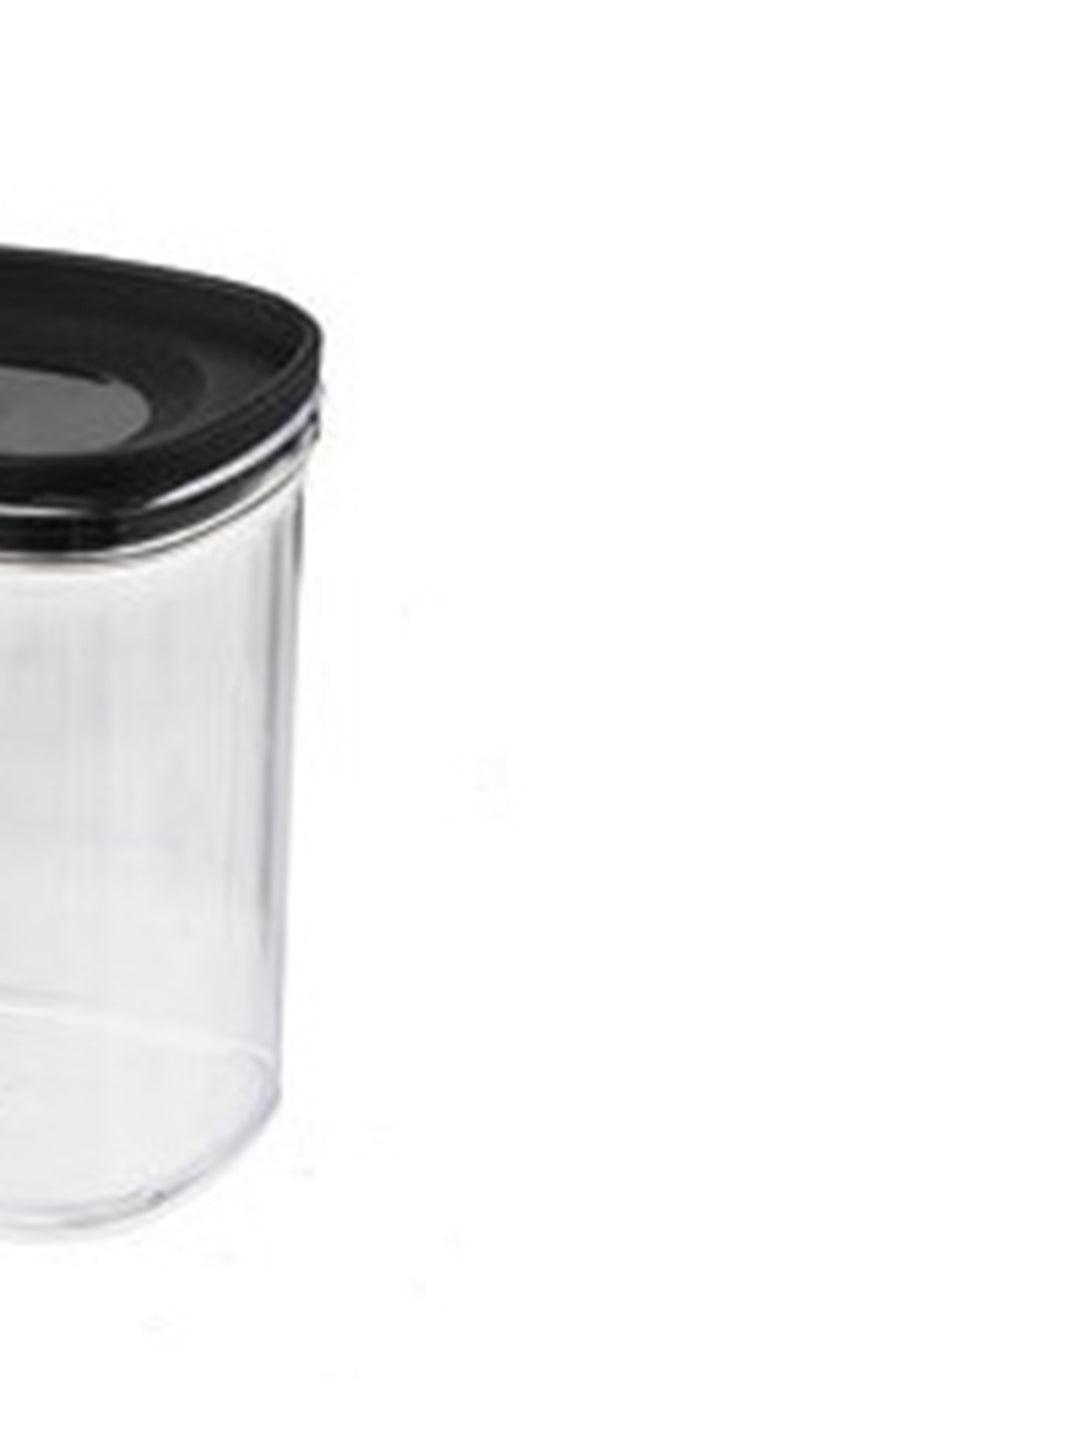 Market 99 Kitchen Cabinet Medium Airtight Plastic Containers - MARKET 99